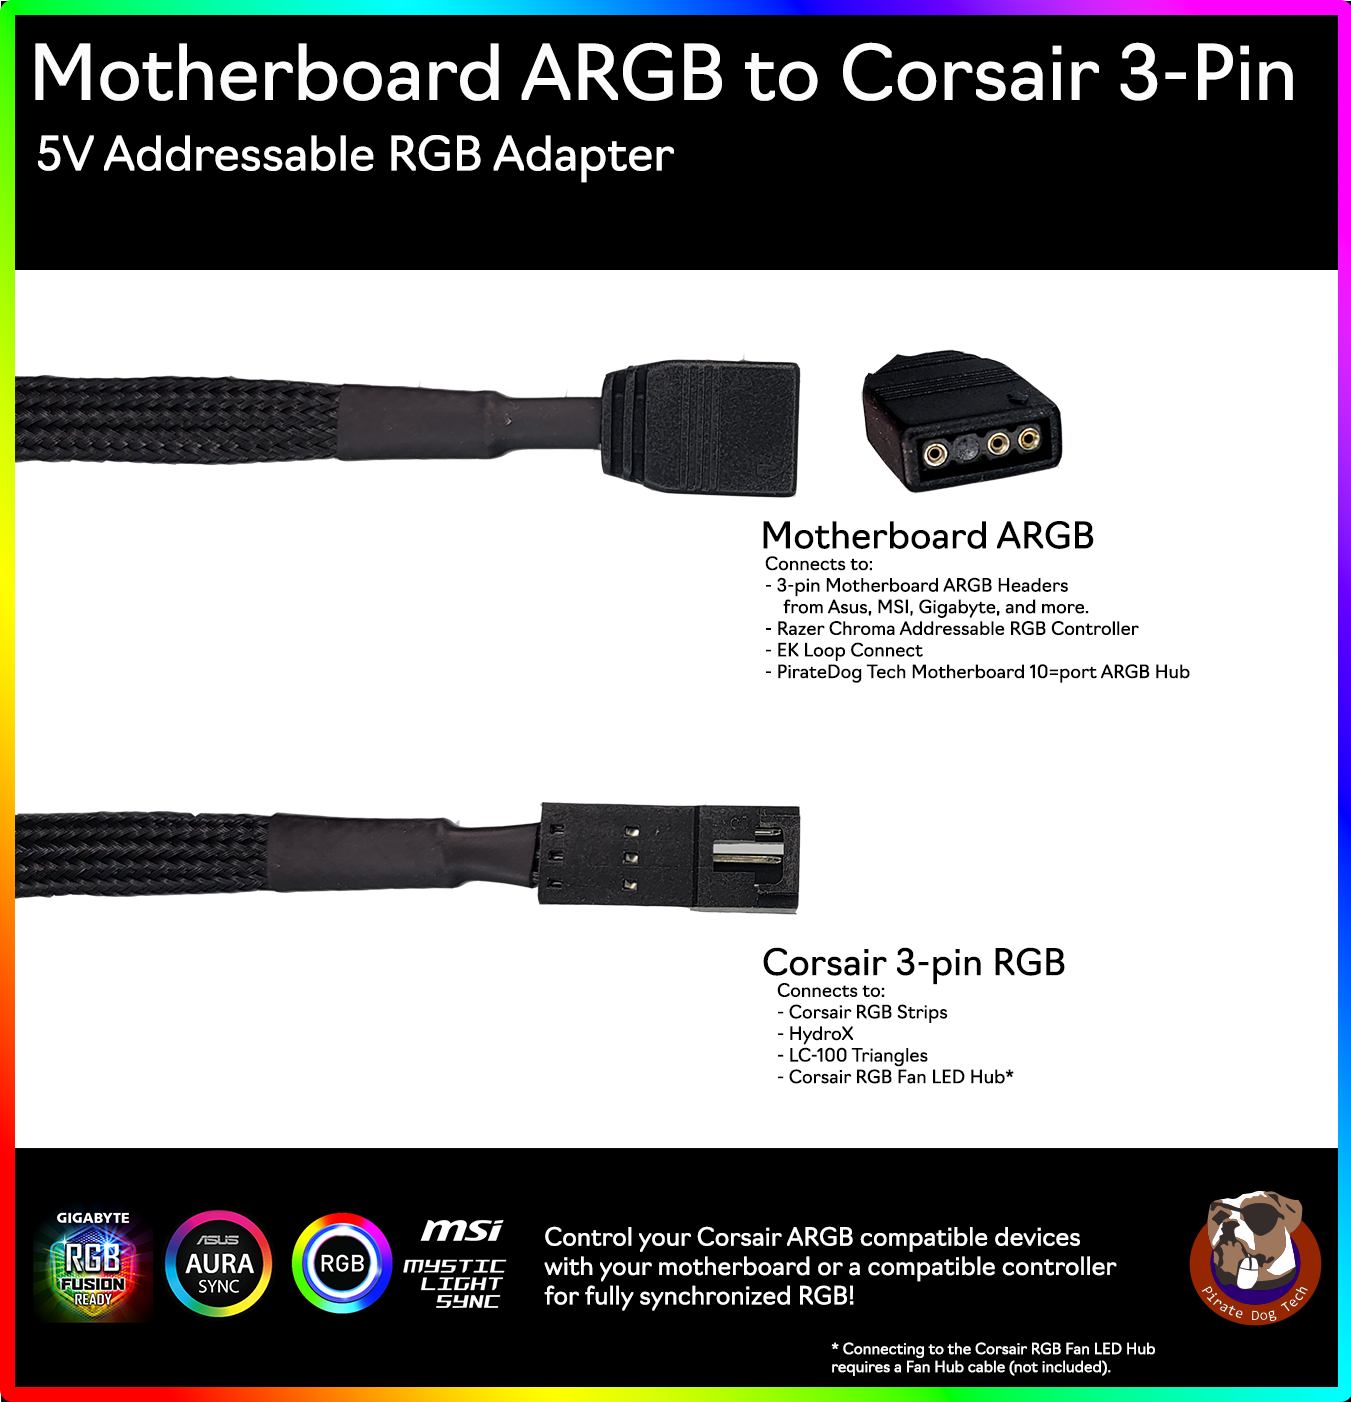 Motherboard A-RGB to Corsair RGB Adapter PirateDog Tech